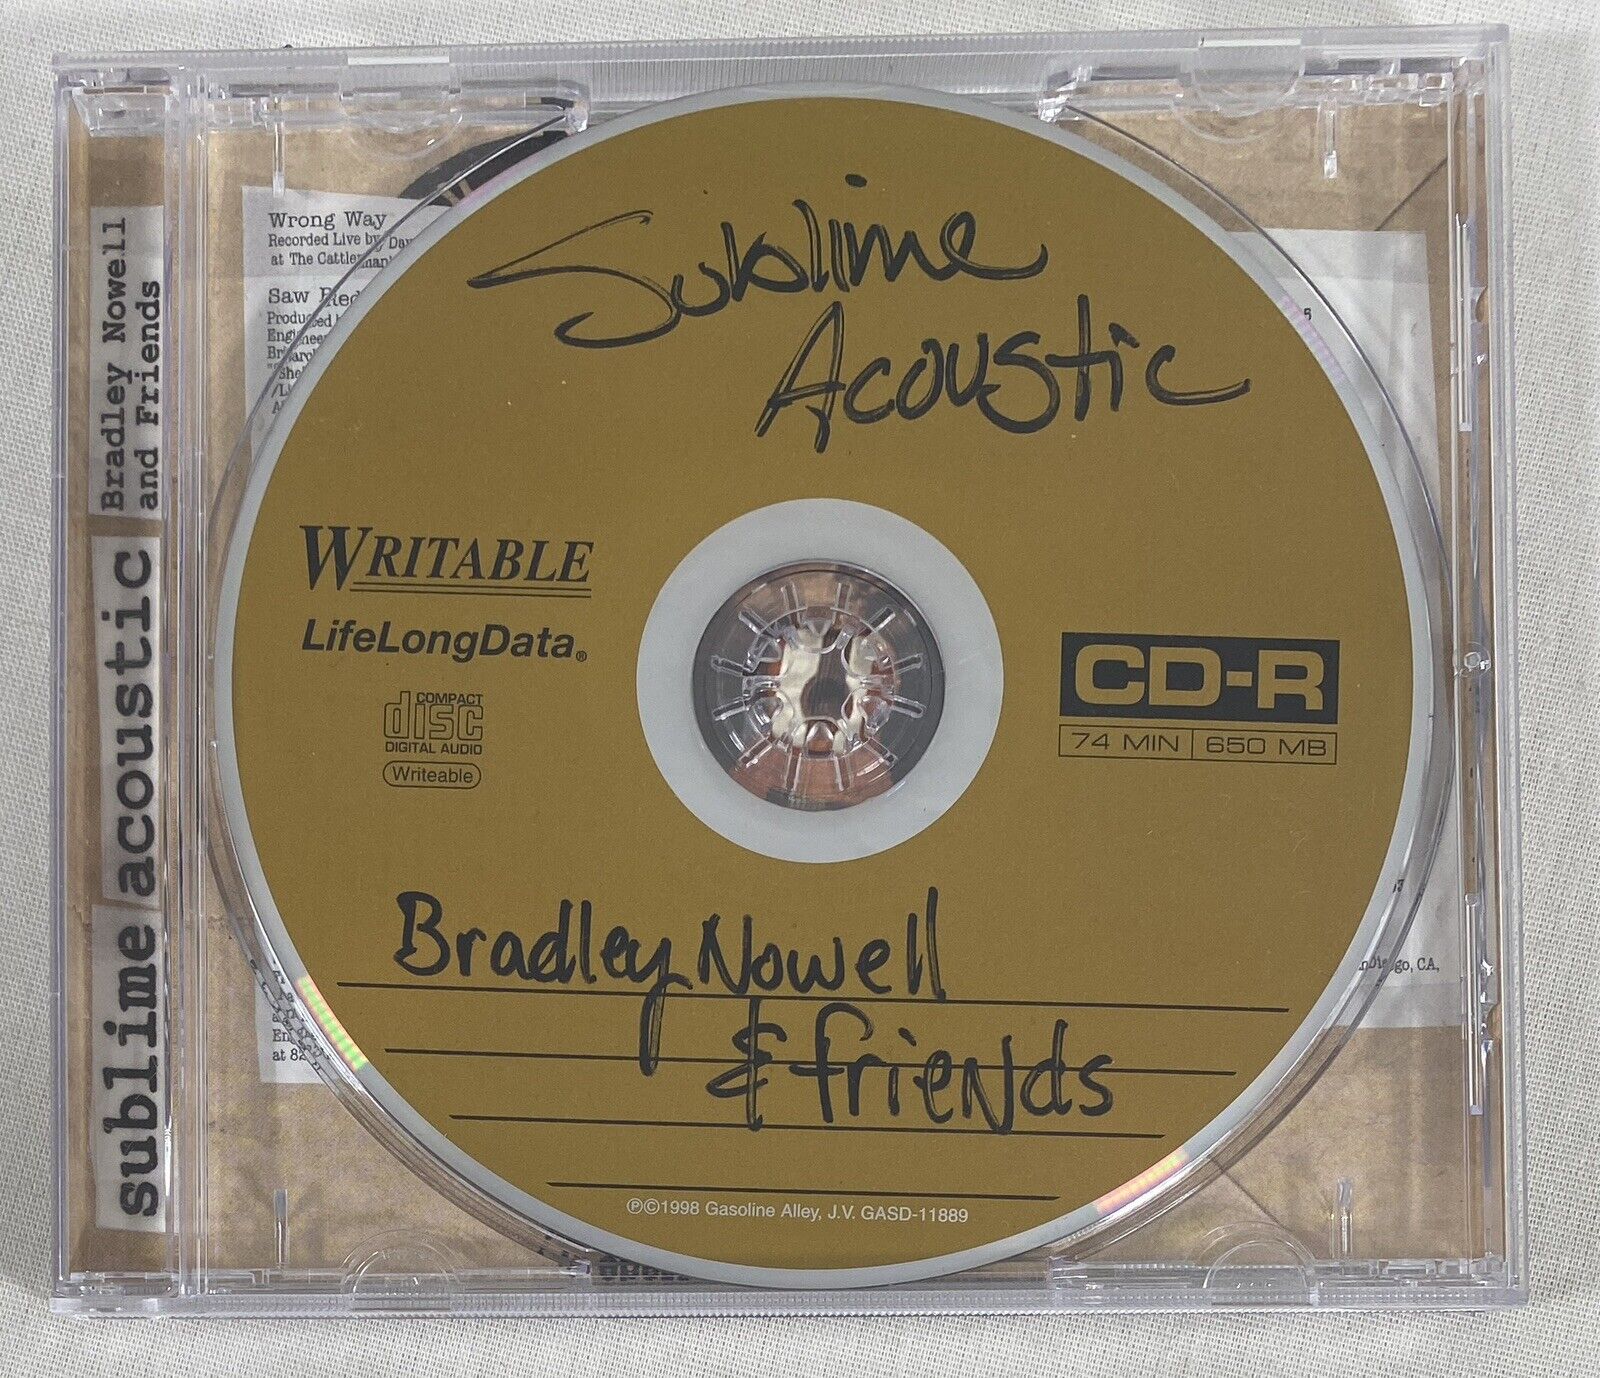 Sublime Acoustic Bradley Nowell & Friends  CD 1998  Gasoline Alley